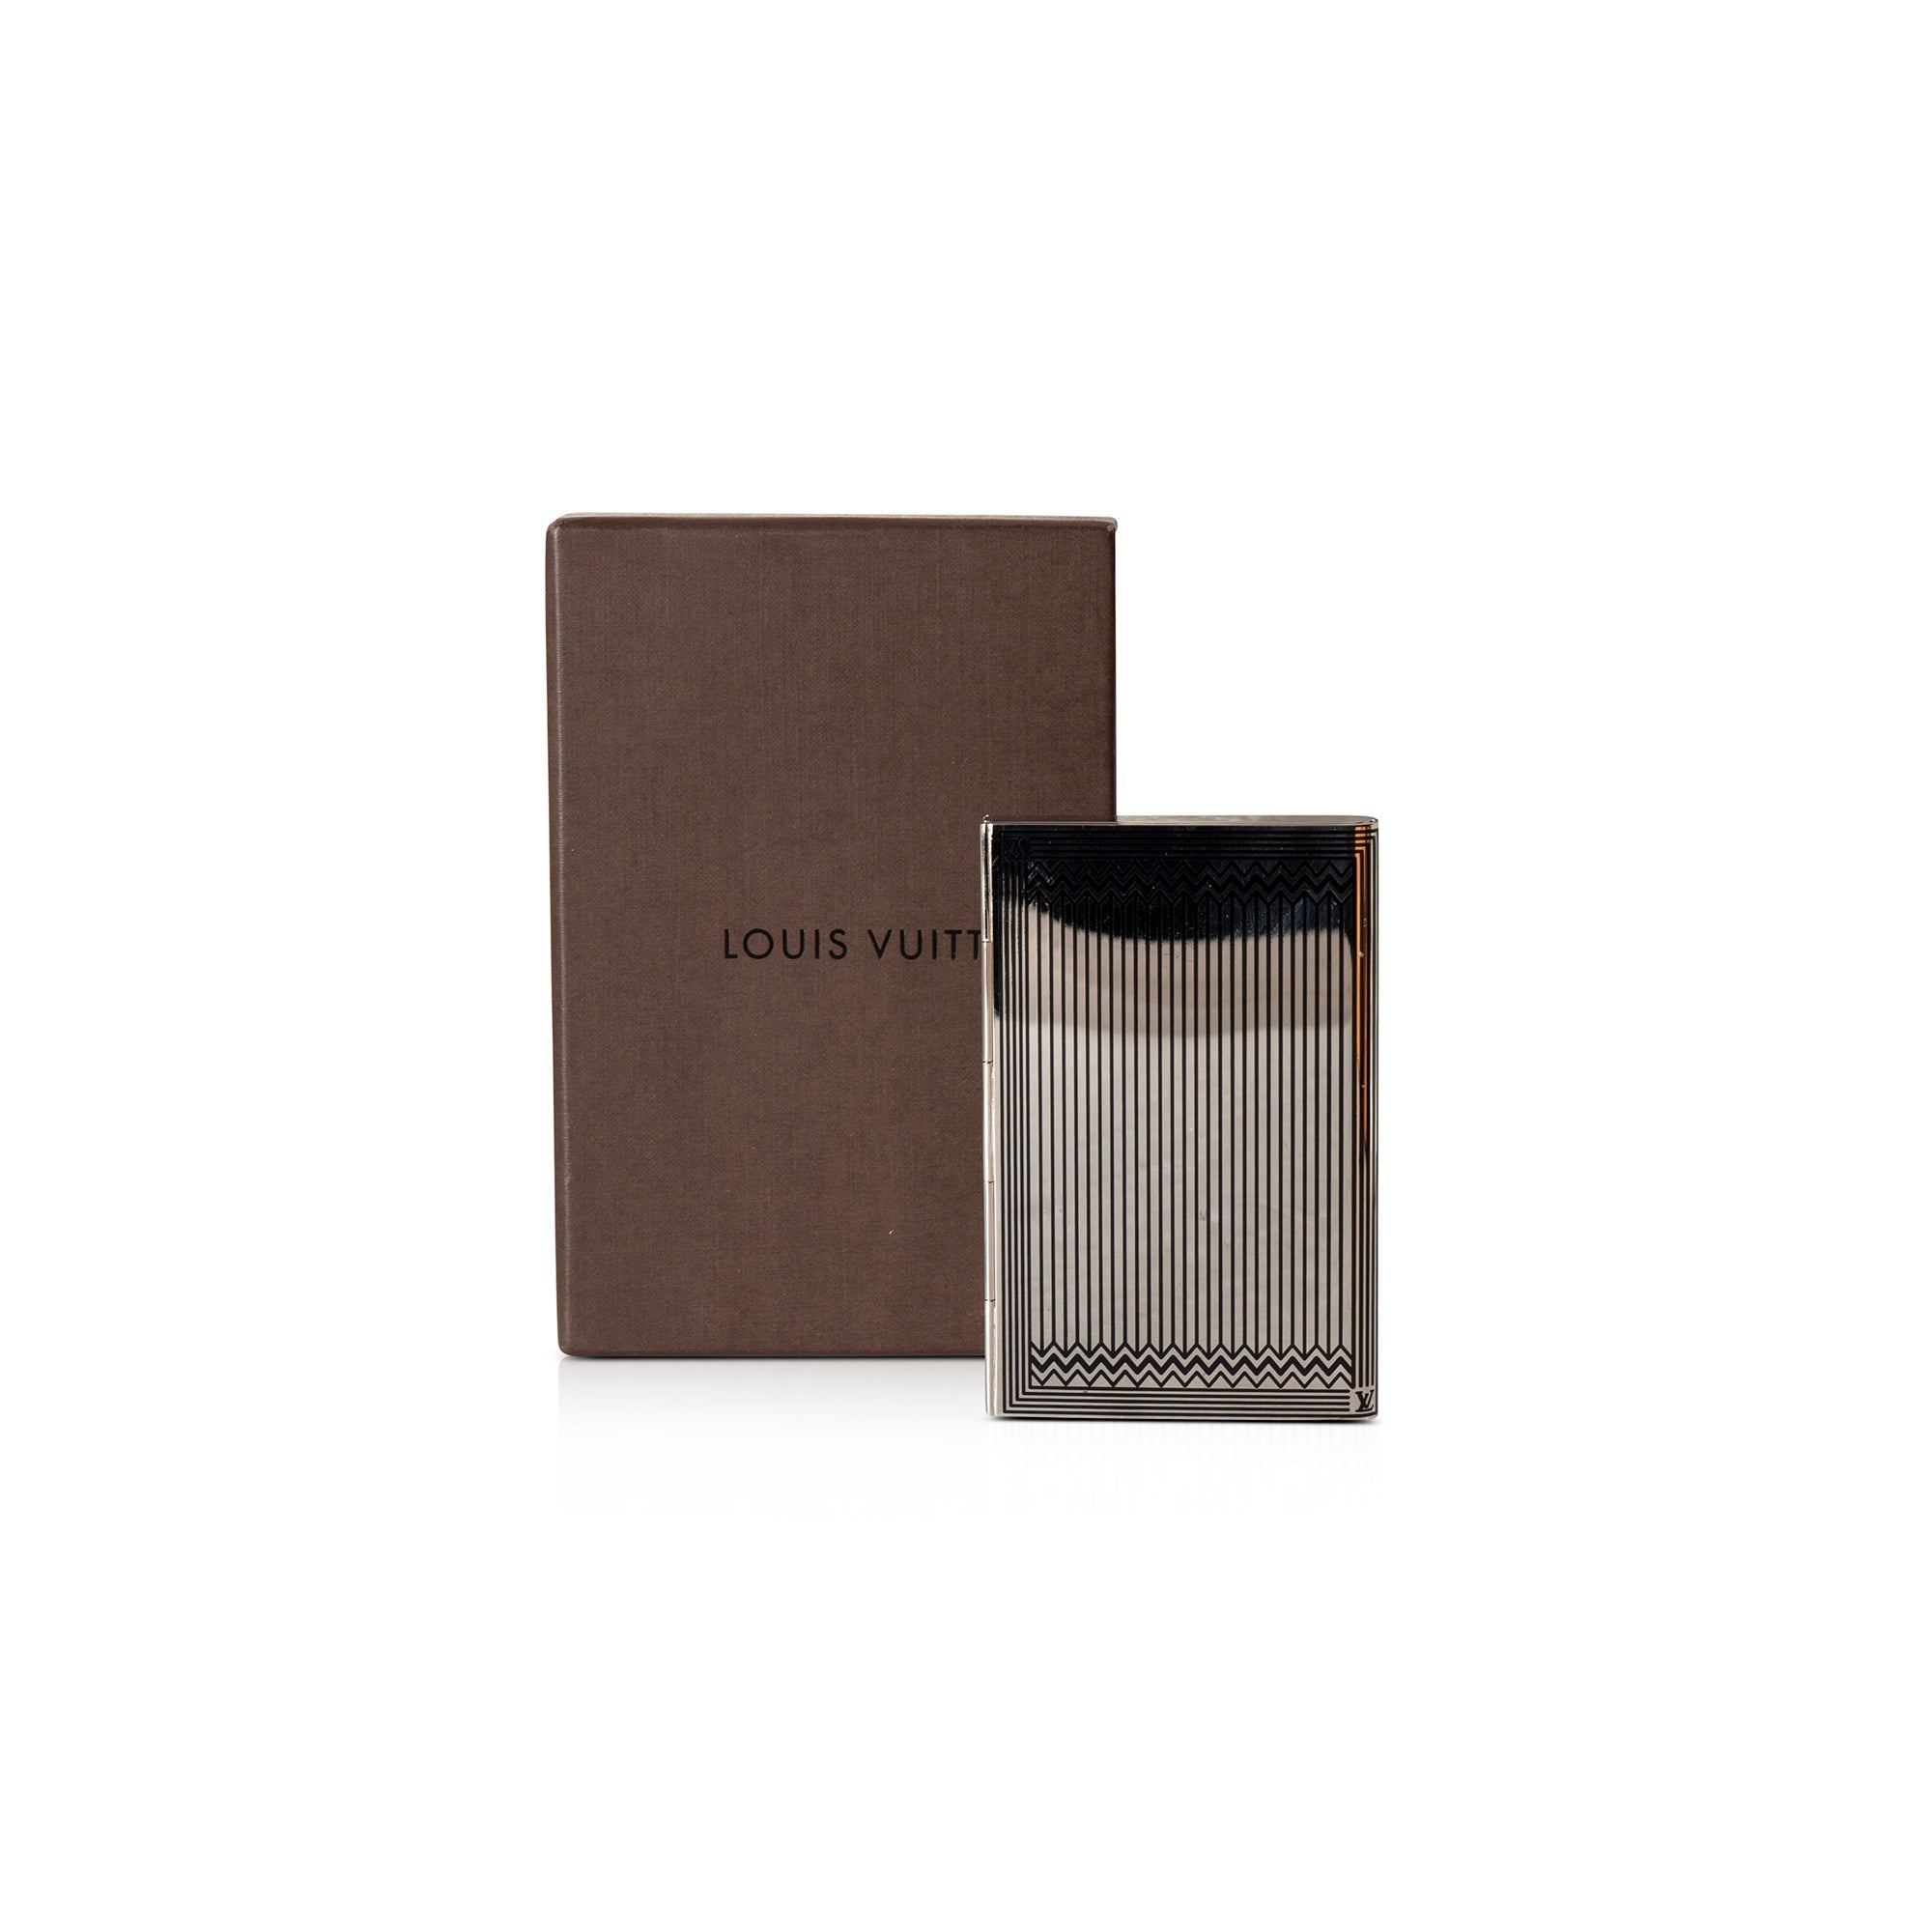 Louis Vuitton Metal Card Holder w/ Box